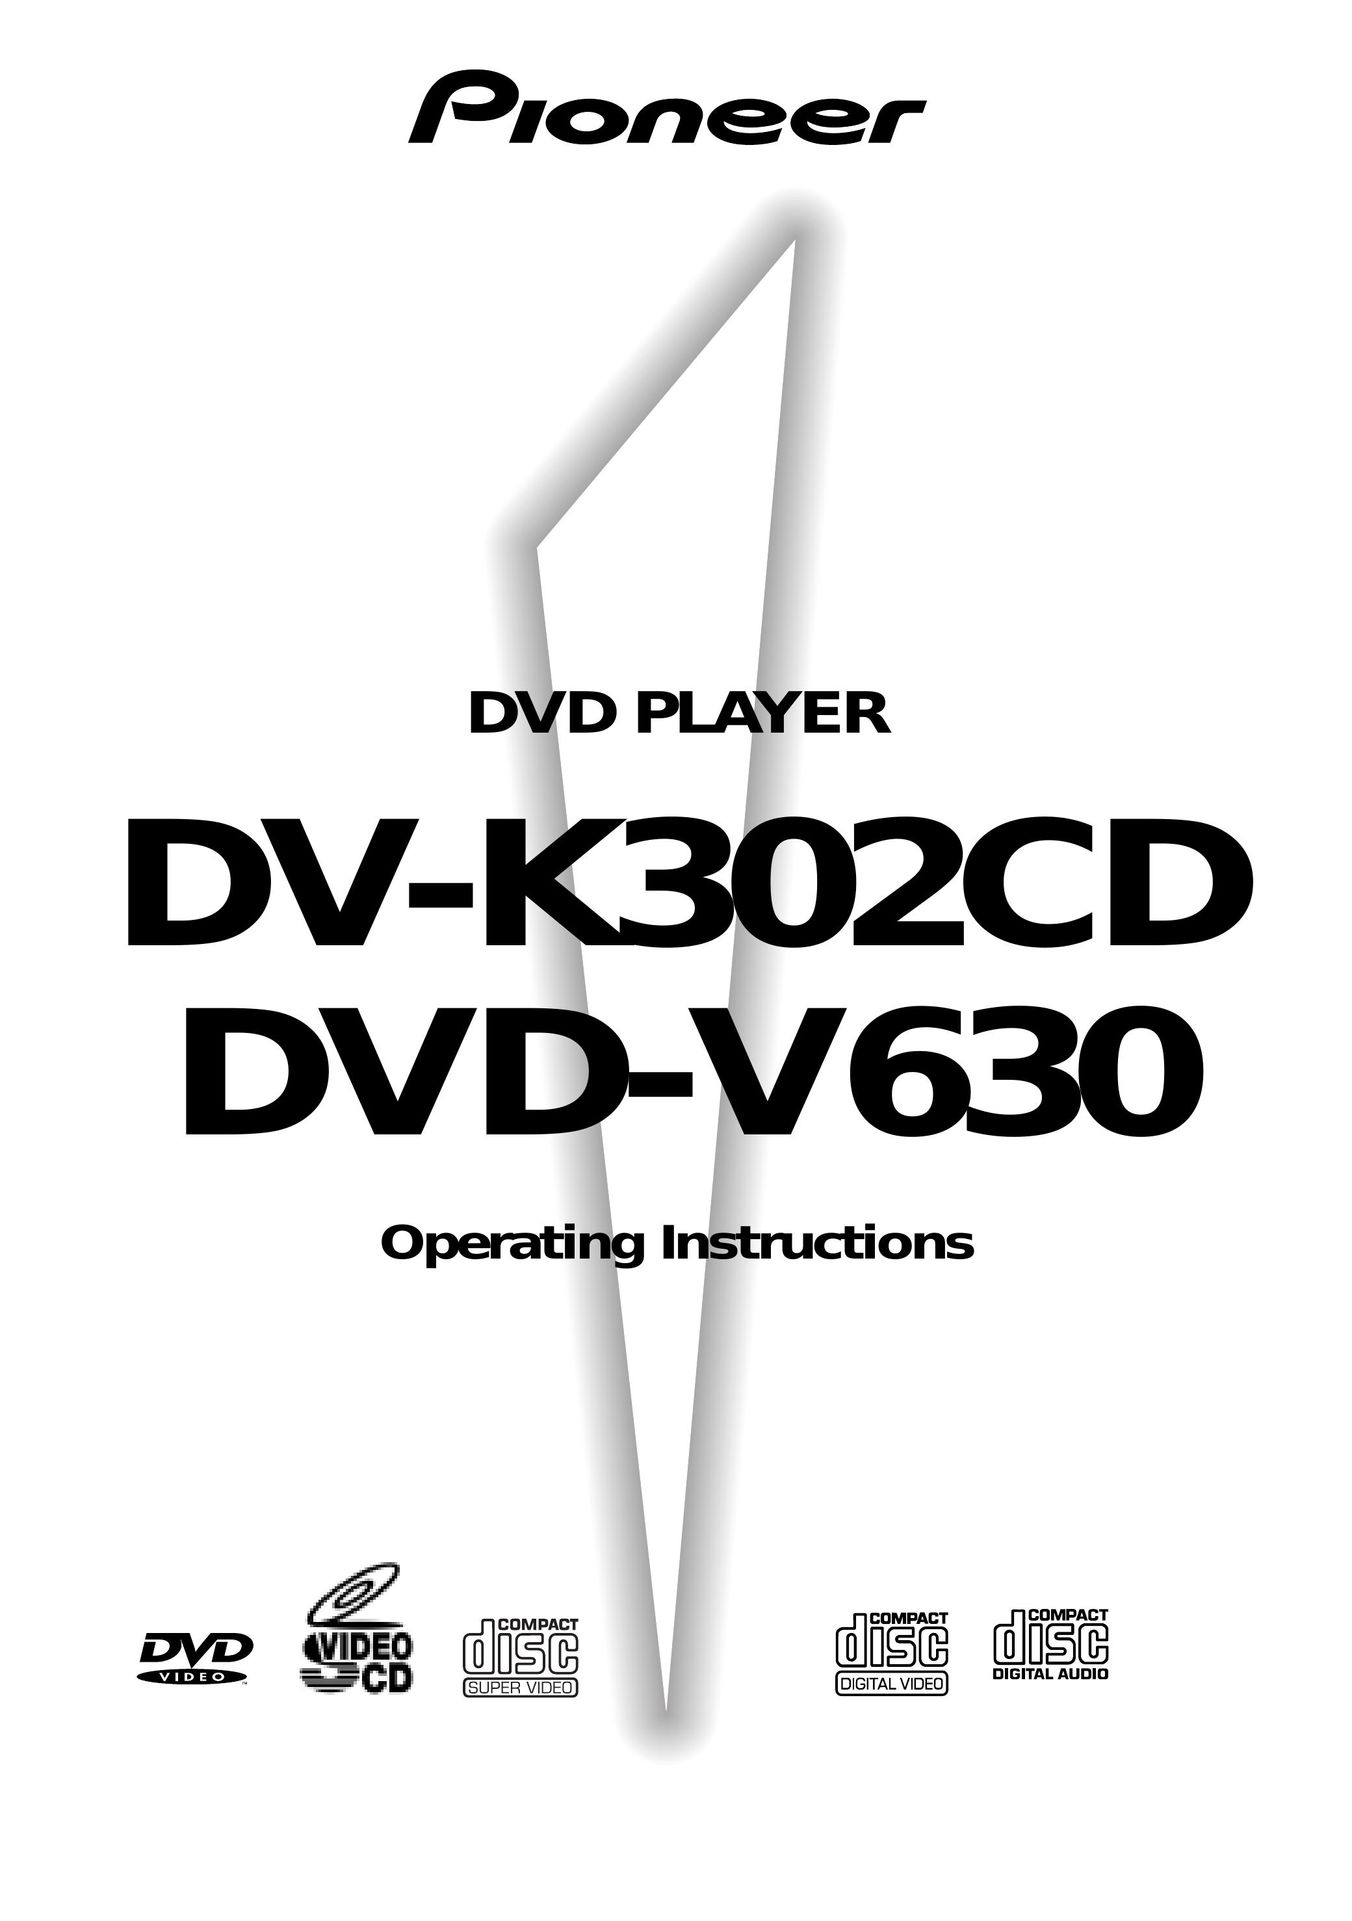 Pioneer DVD-V630 TV DVD Combo User Manual